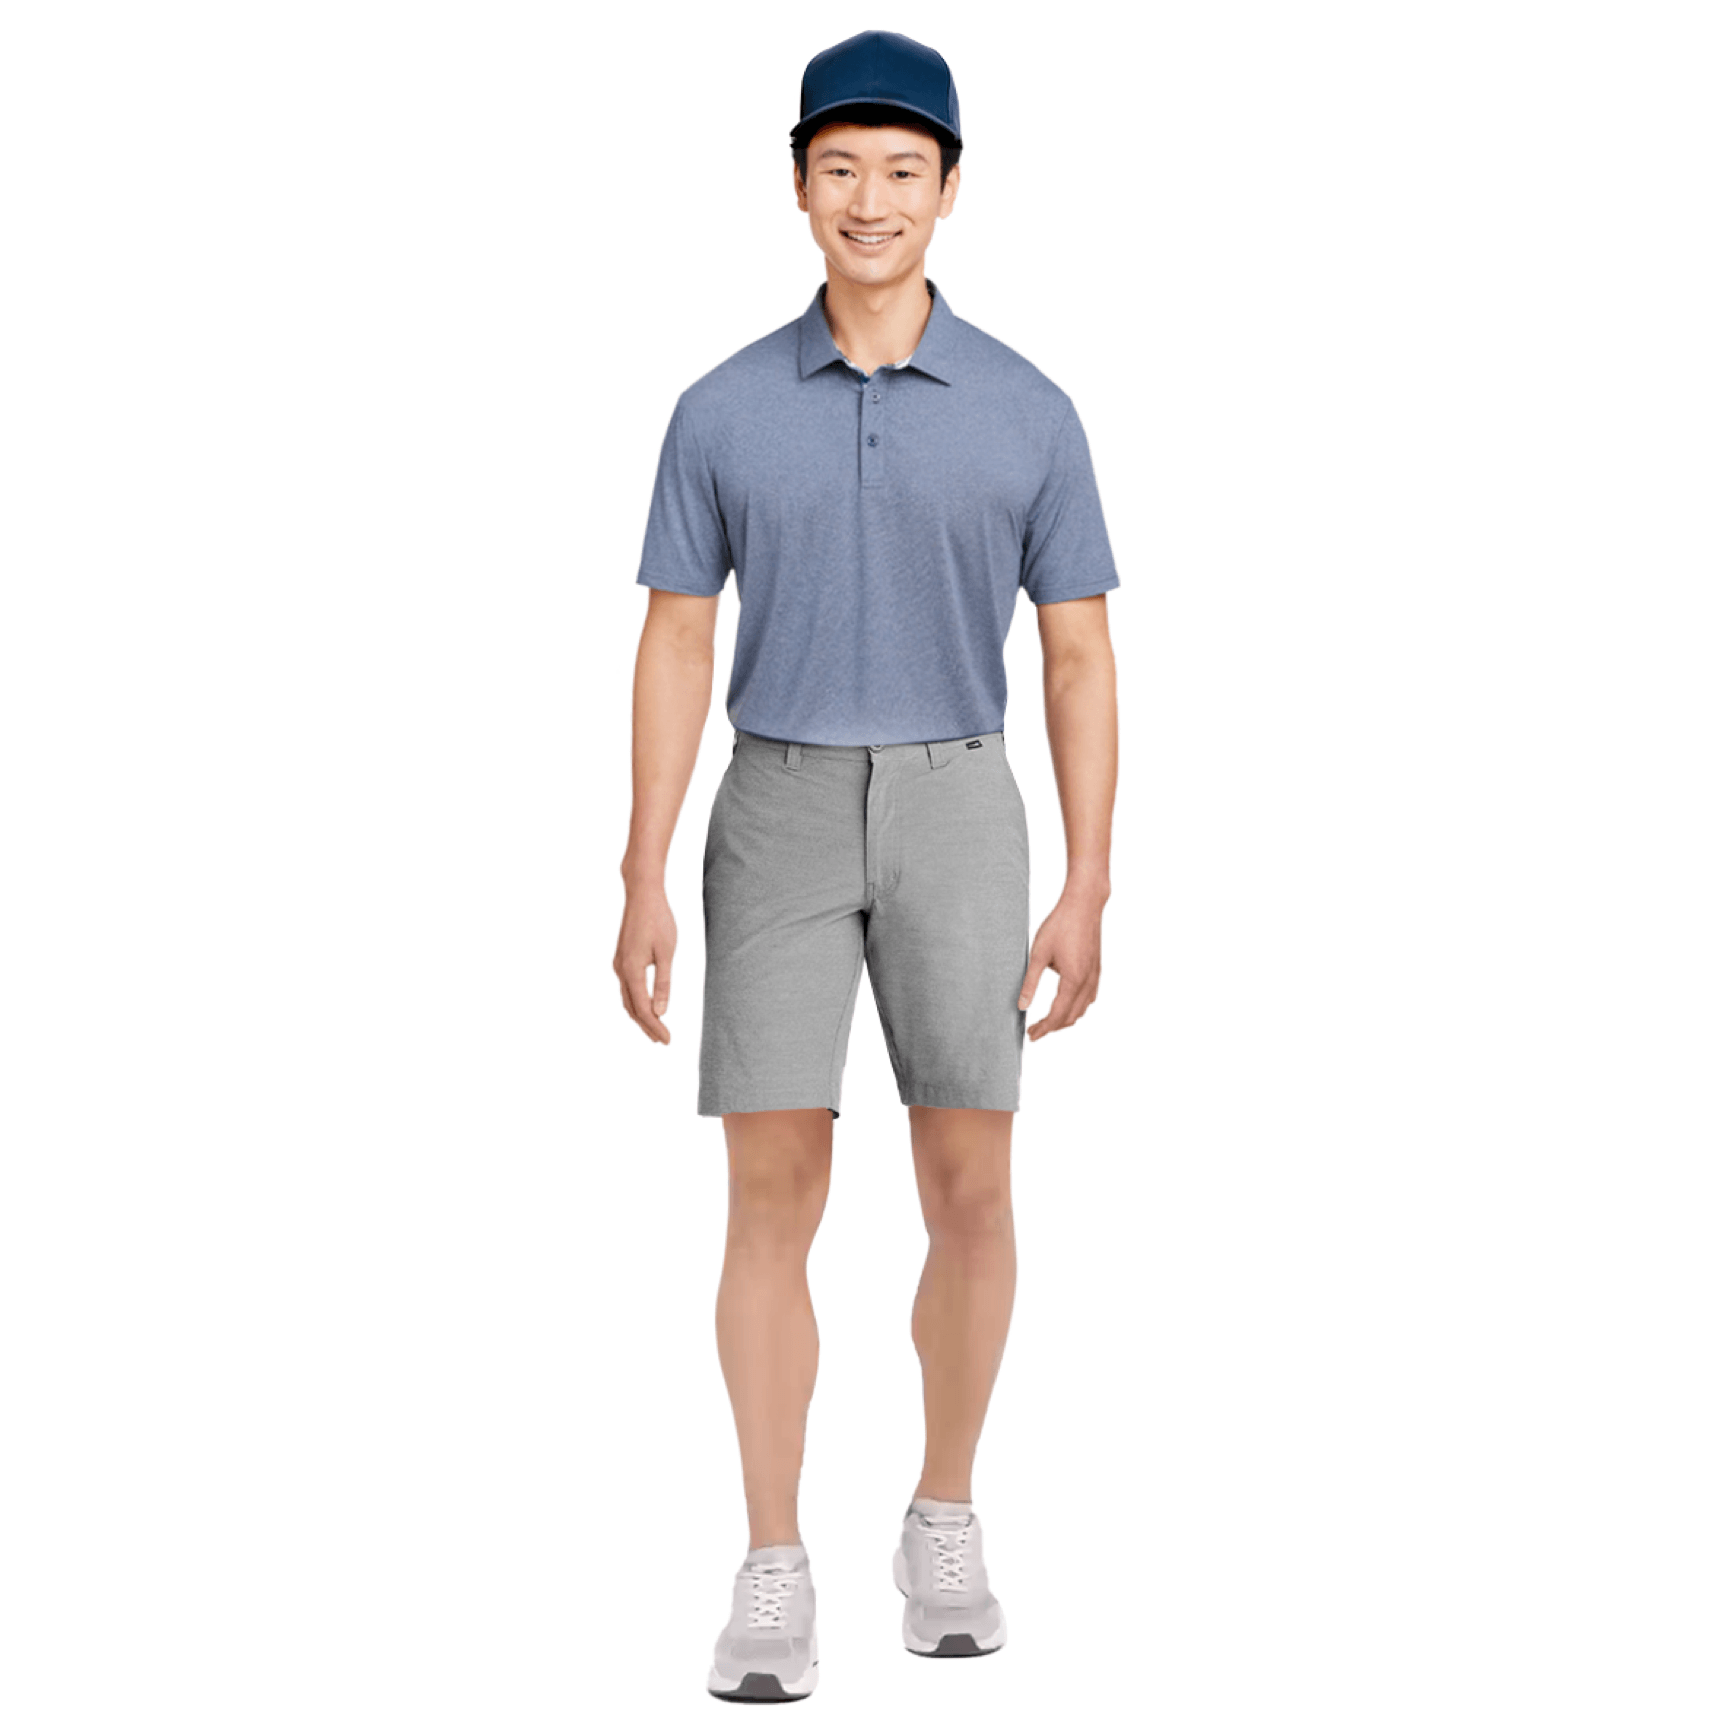 Male modeling golf attire